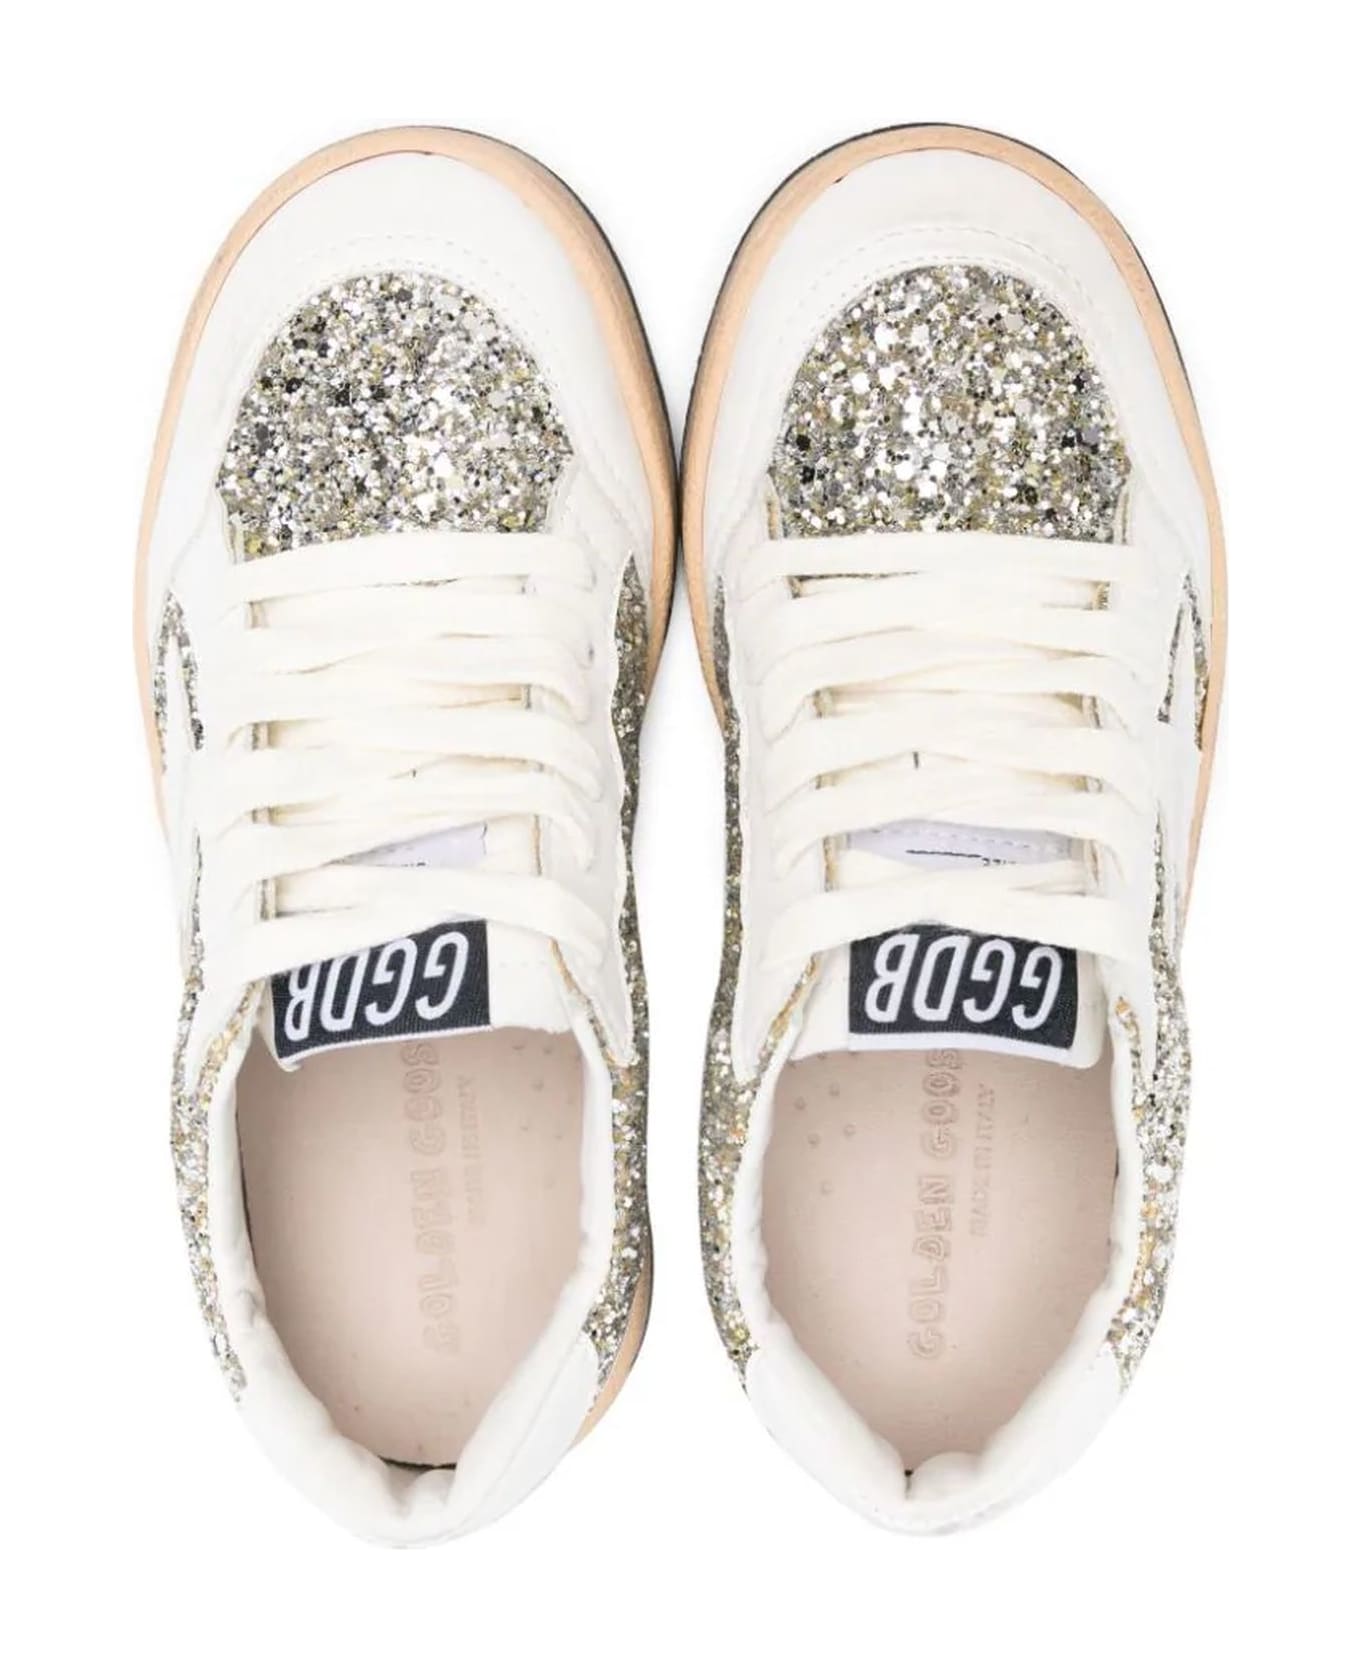 Golden Goose White Leather Sneakers - Optic White/Platinum シューズ